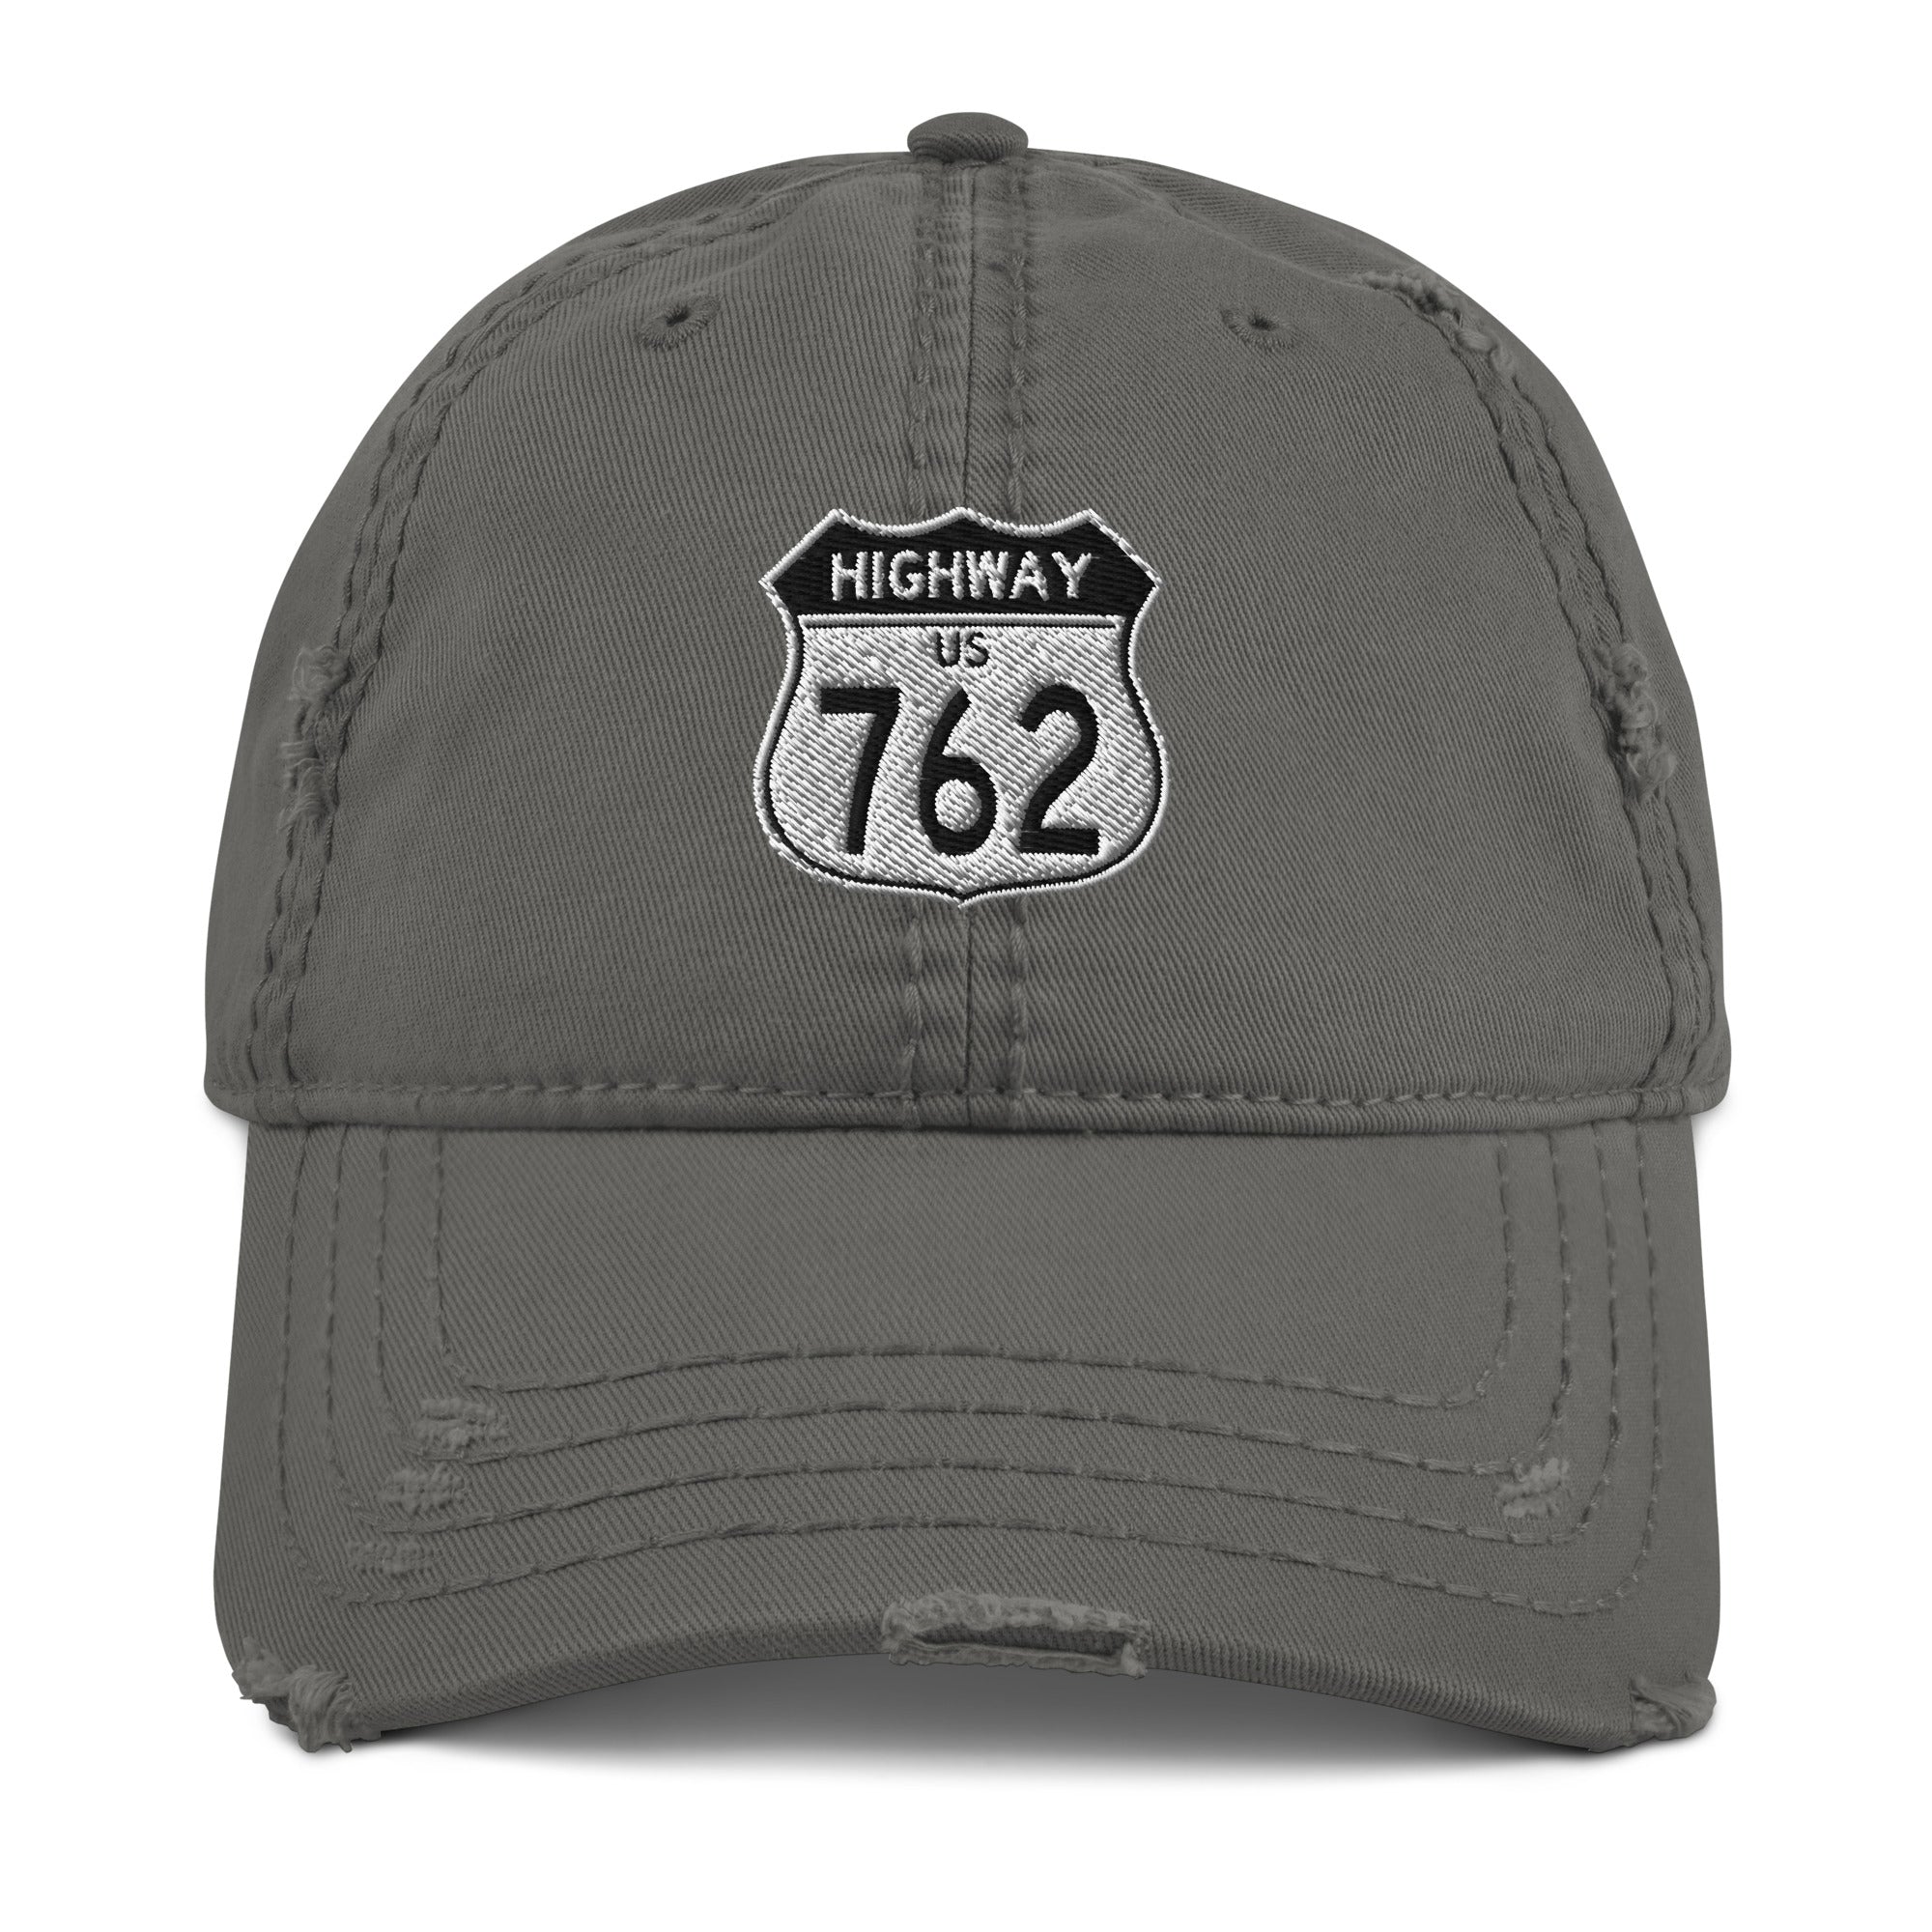 Highway 762 Distressed Dad Hat